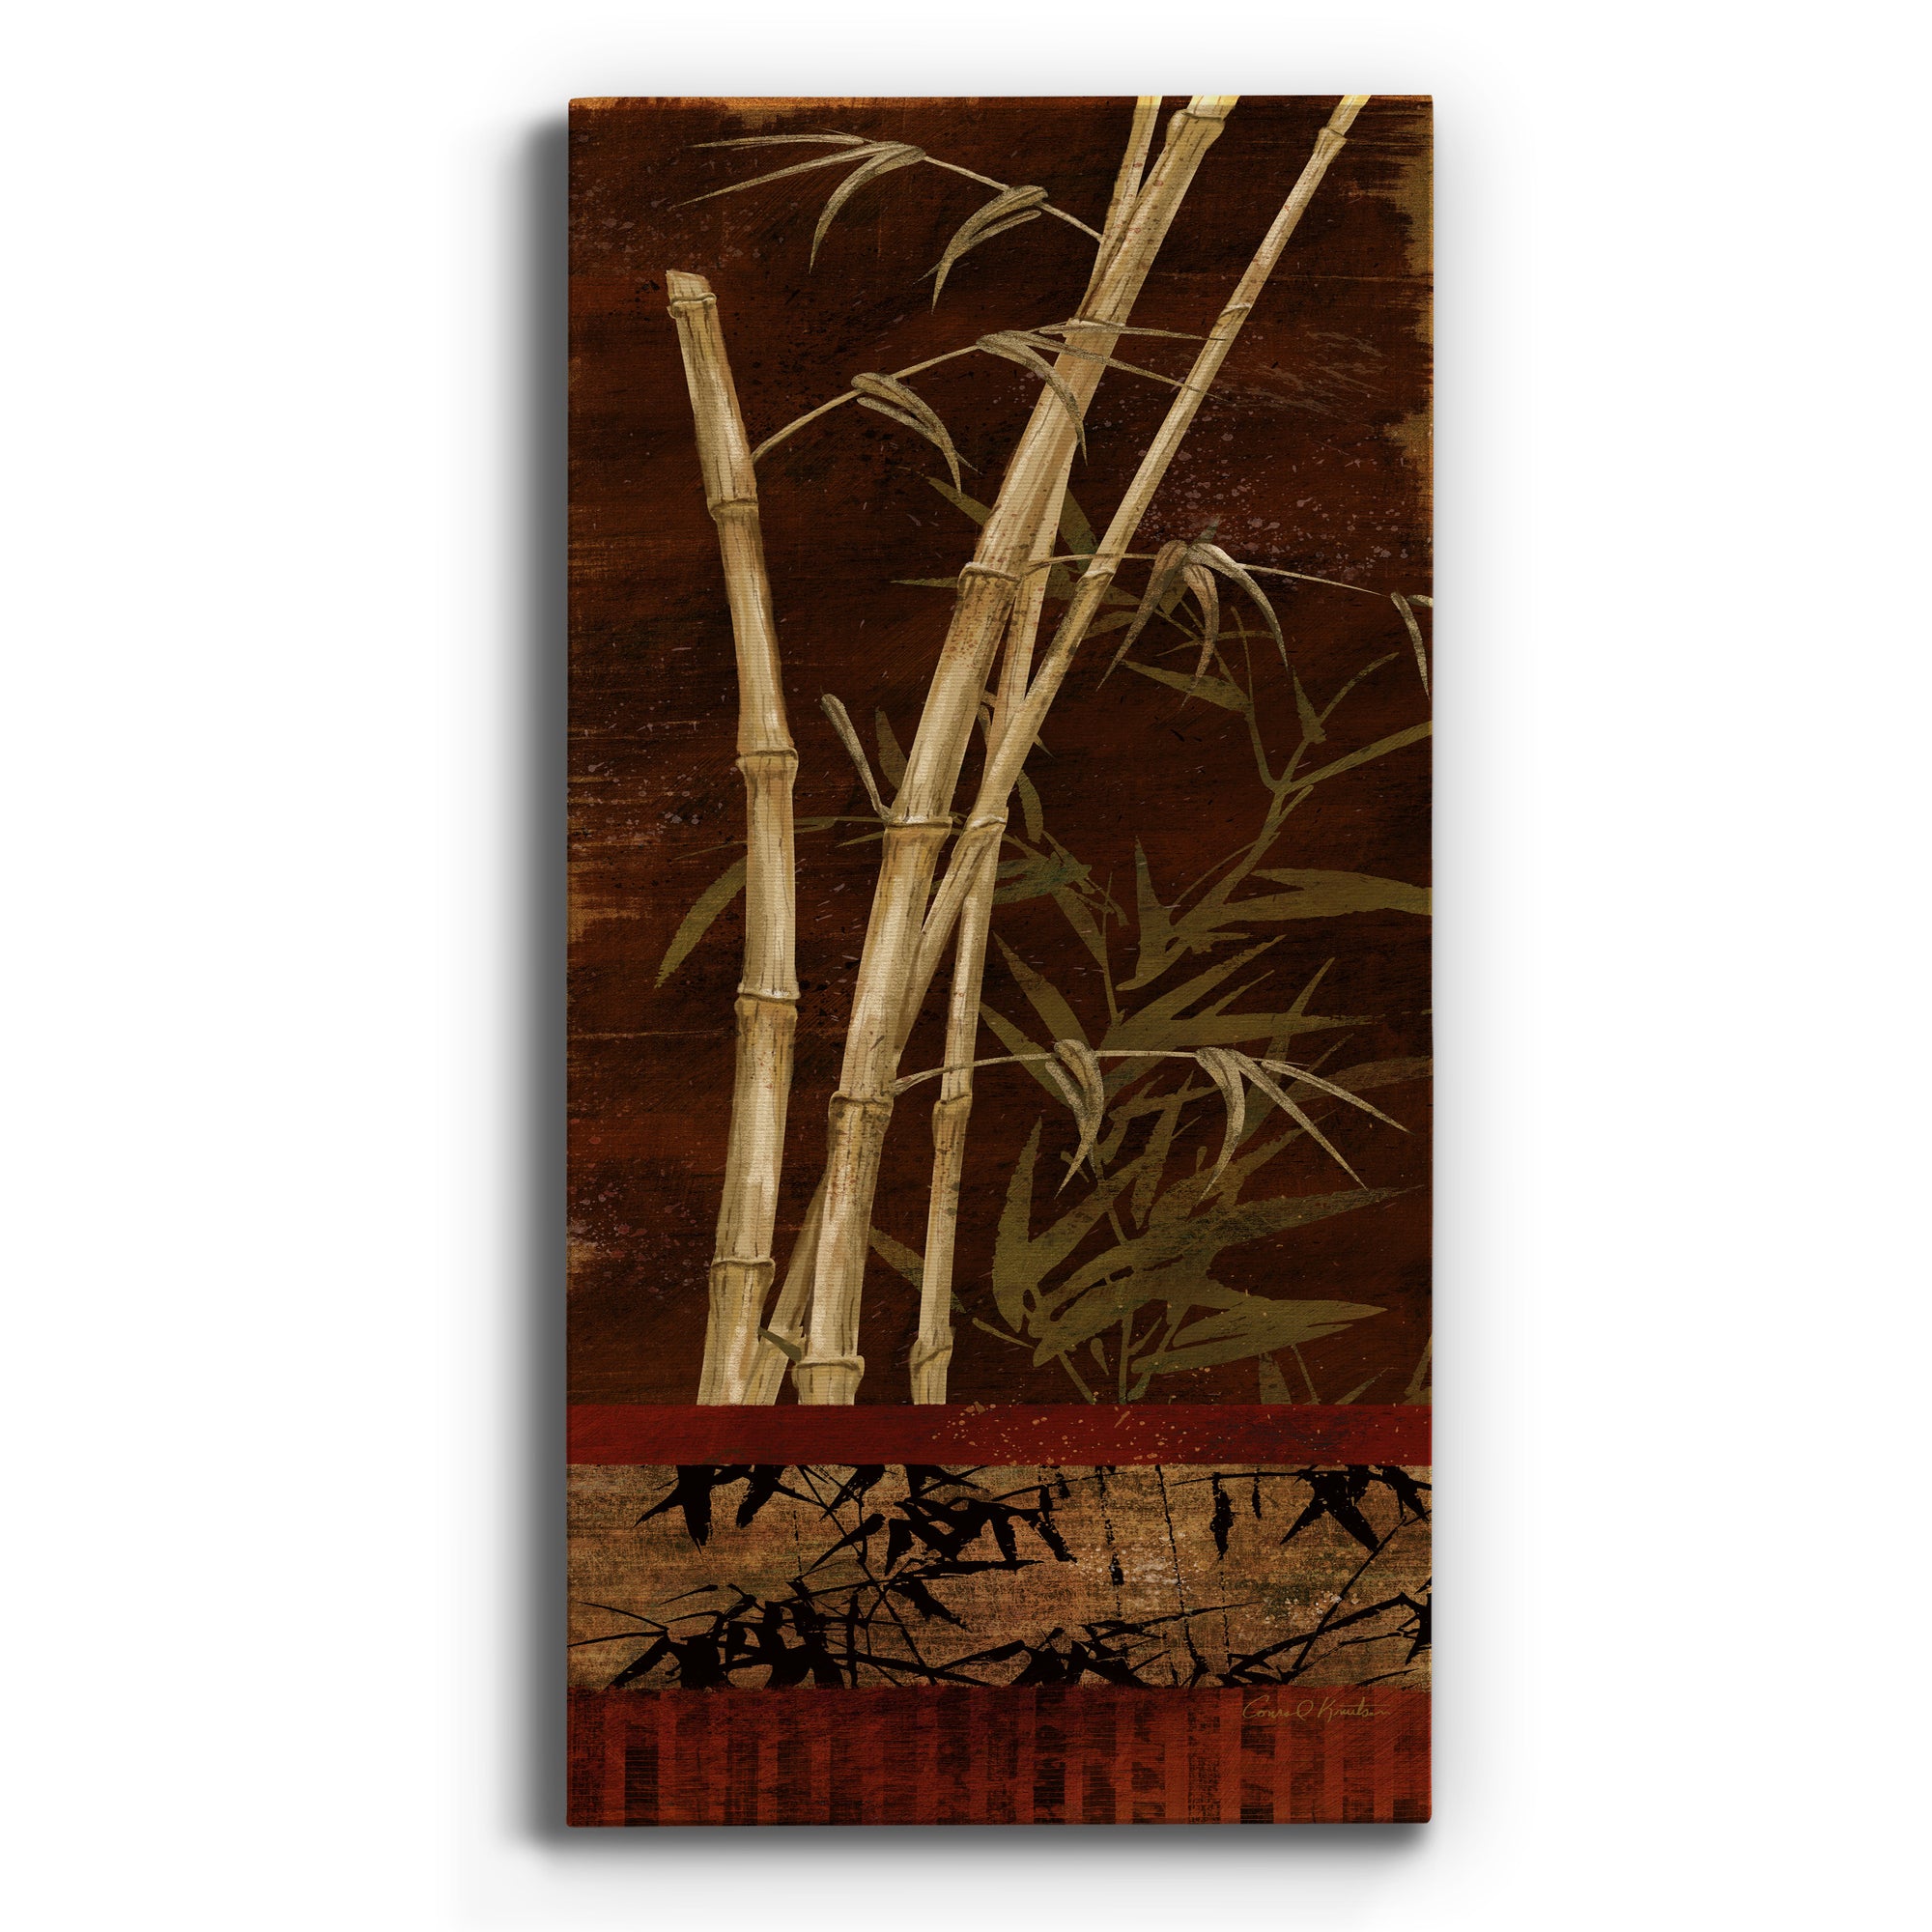 Bamboo Garden I - Premium Gallery Wrapped Canvas - Ready to Hang